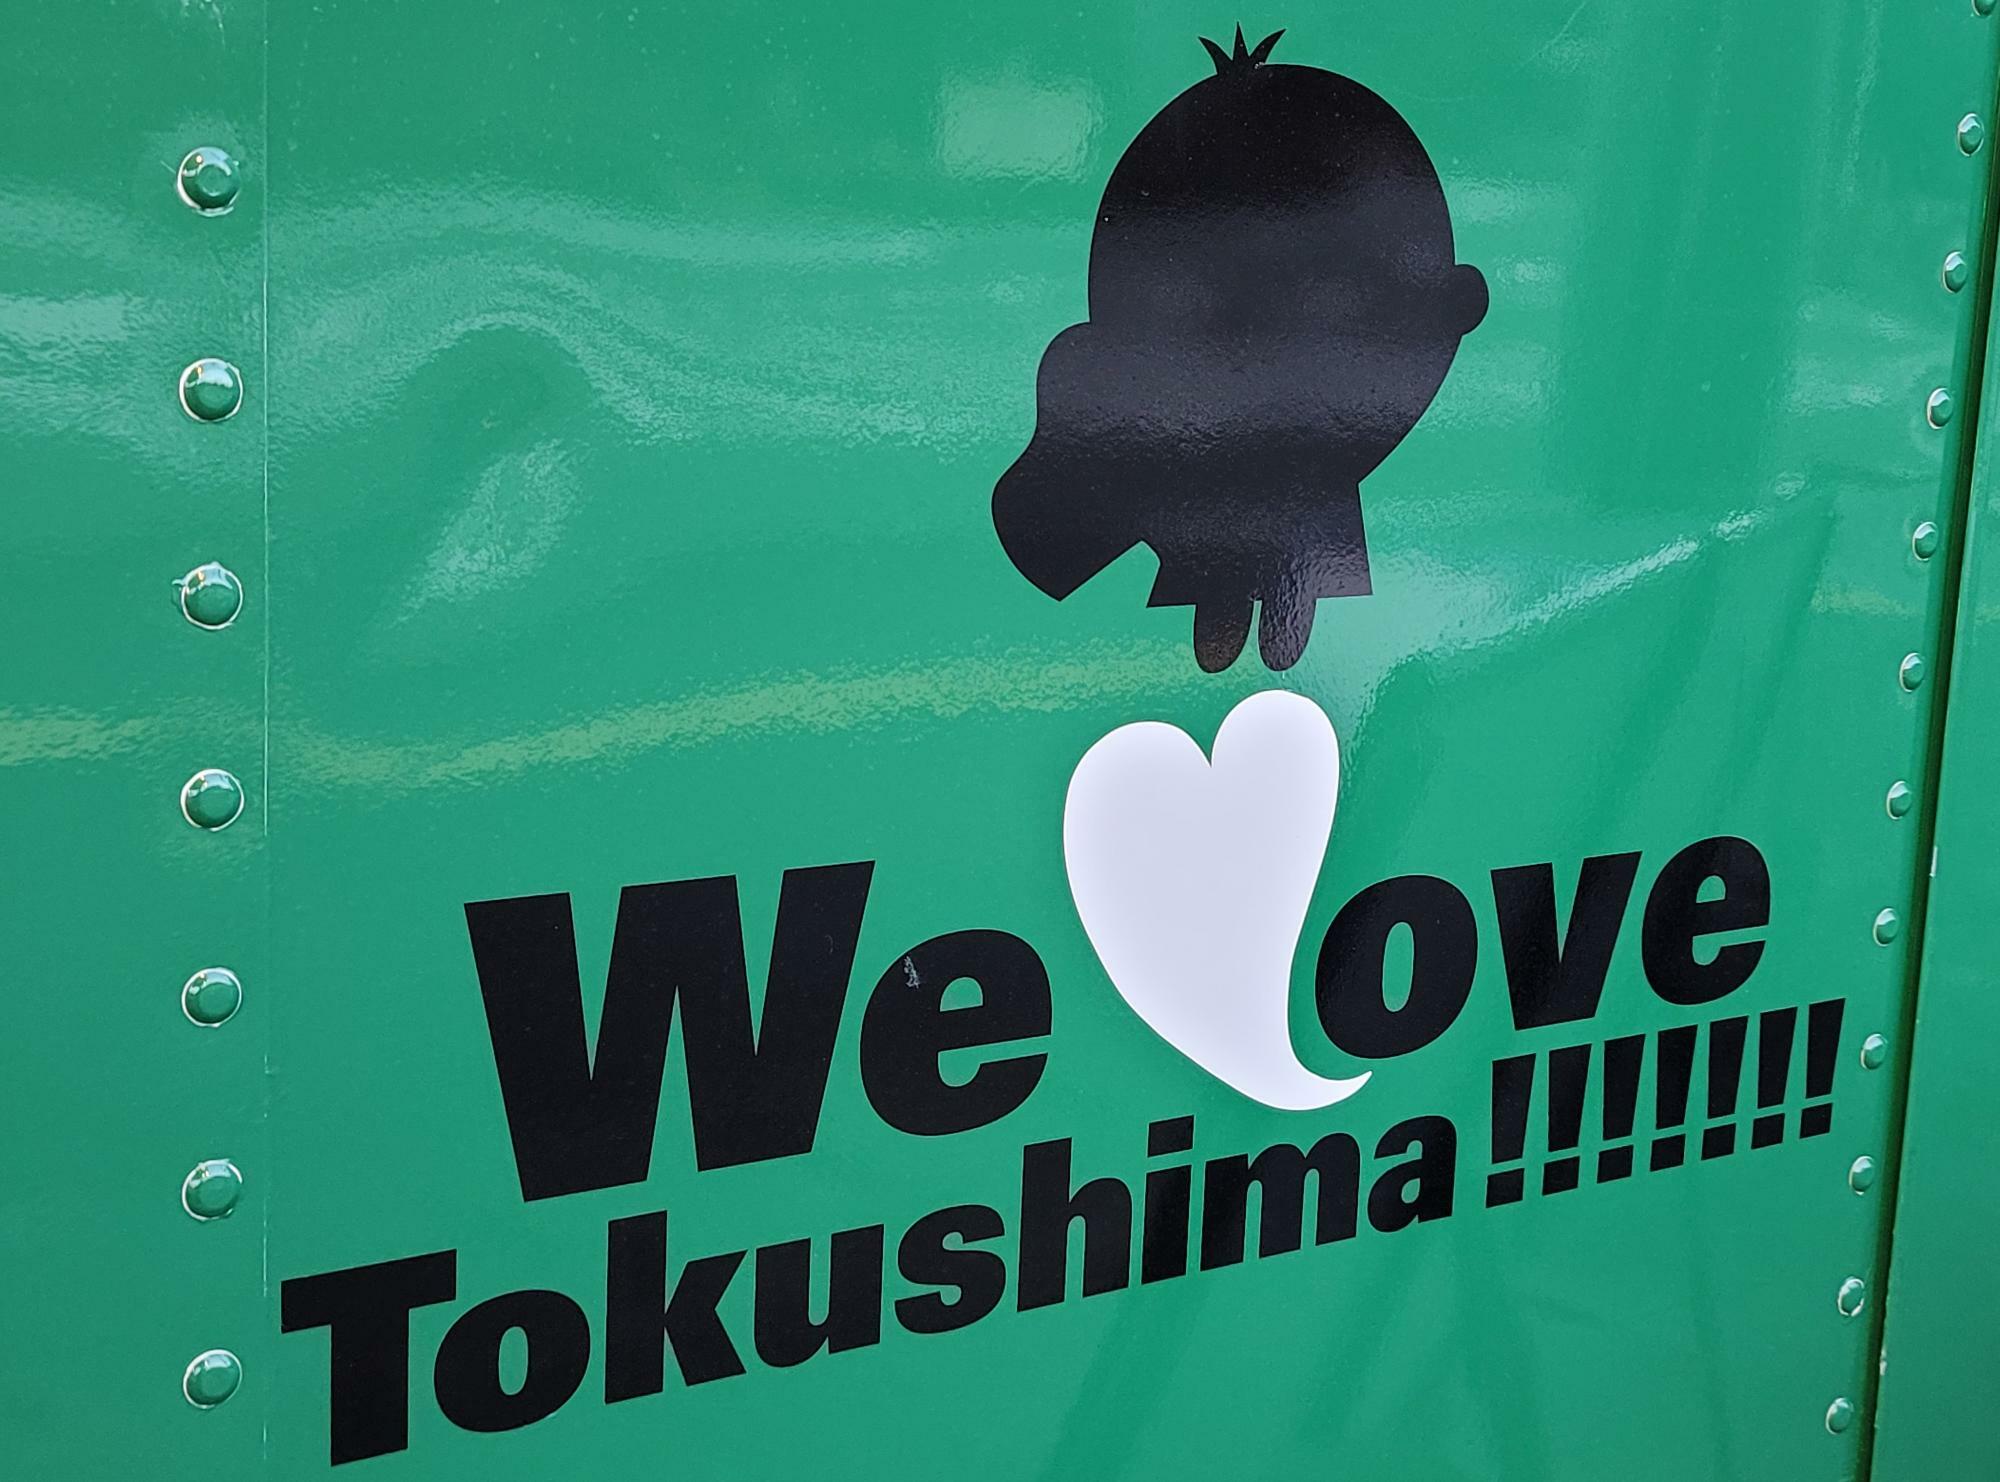 「We Love Tokushima!!!!!!!号」のボディにペイントされたロゴ。